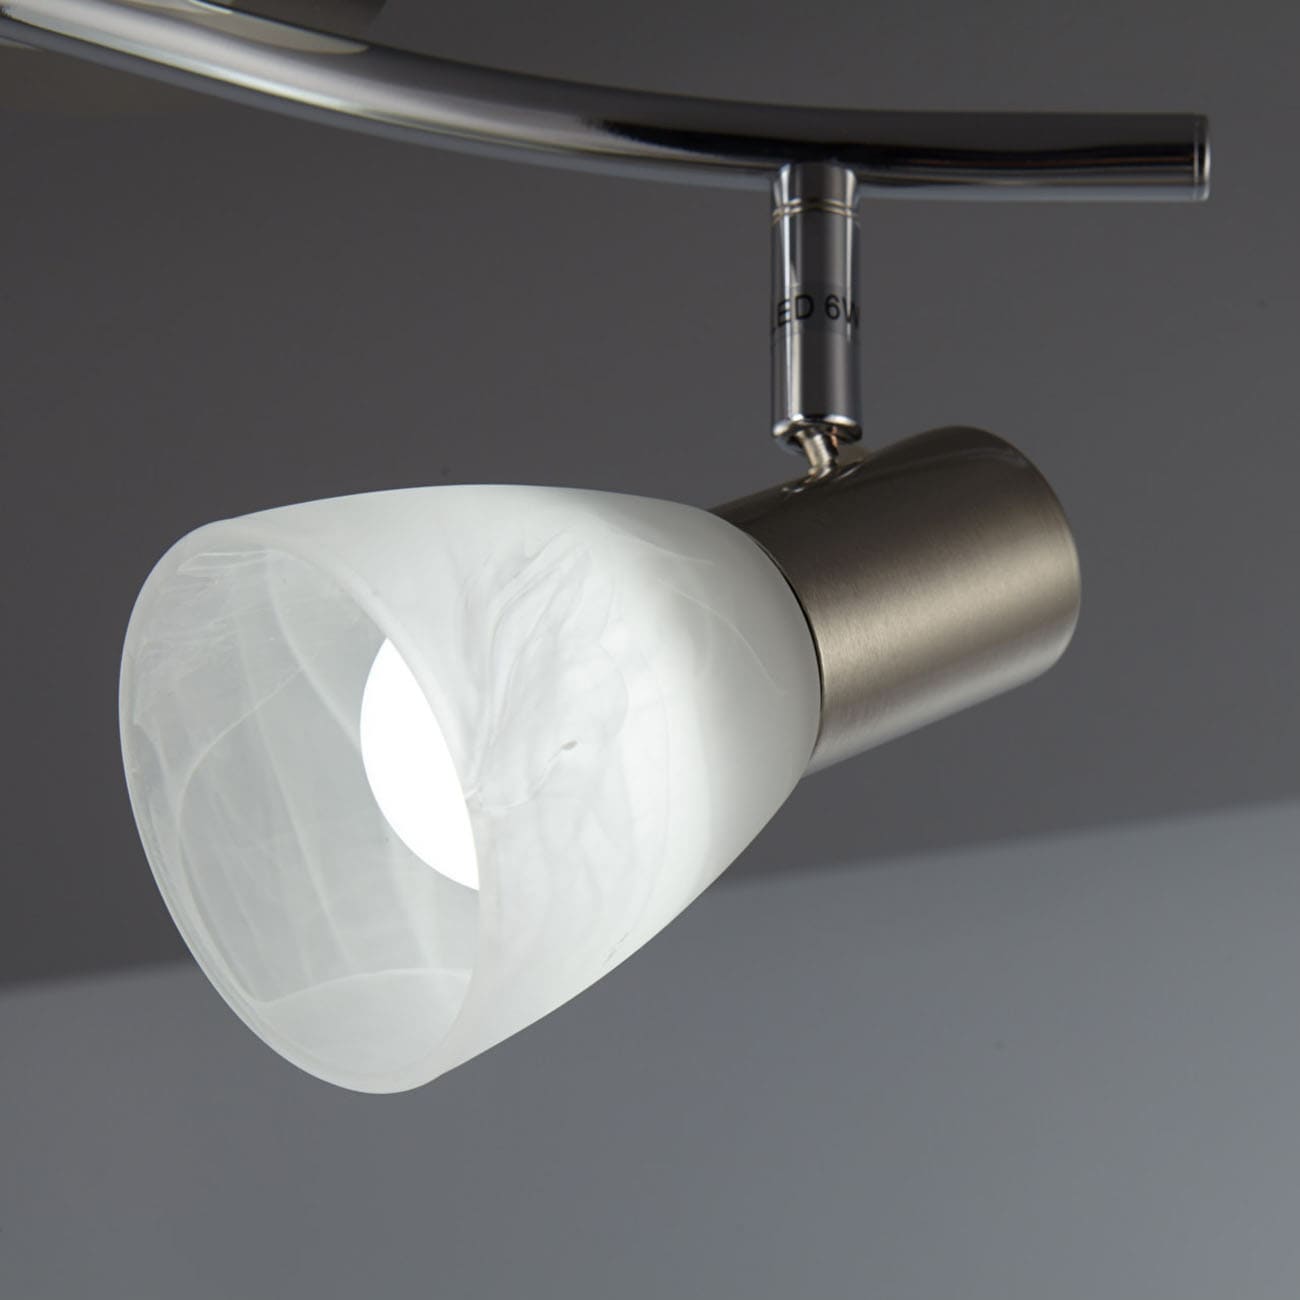 LED Deckenspot 34x14cm - 2-flammig - Spots drehbar schwenkbar Glas Metall E14 10W 940lm warmweiß | chrom matt-nickel - 5